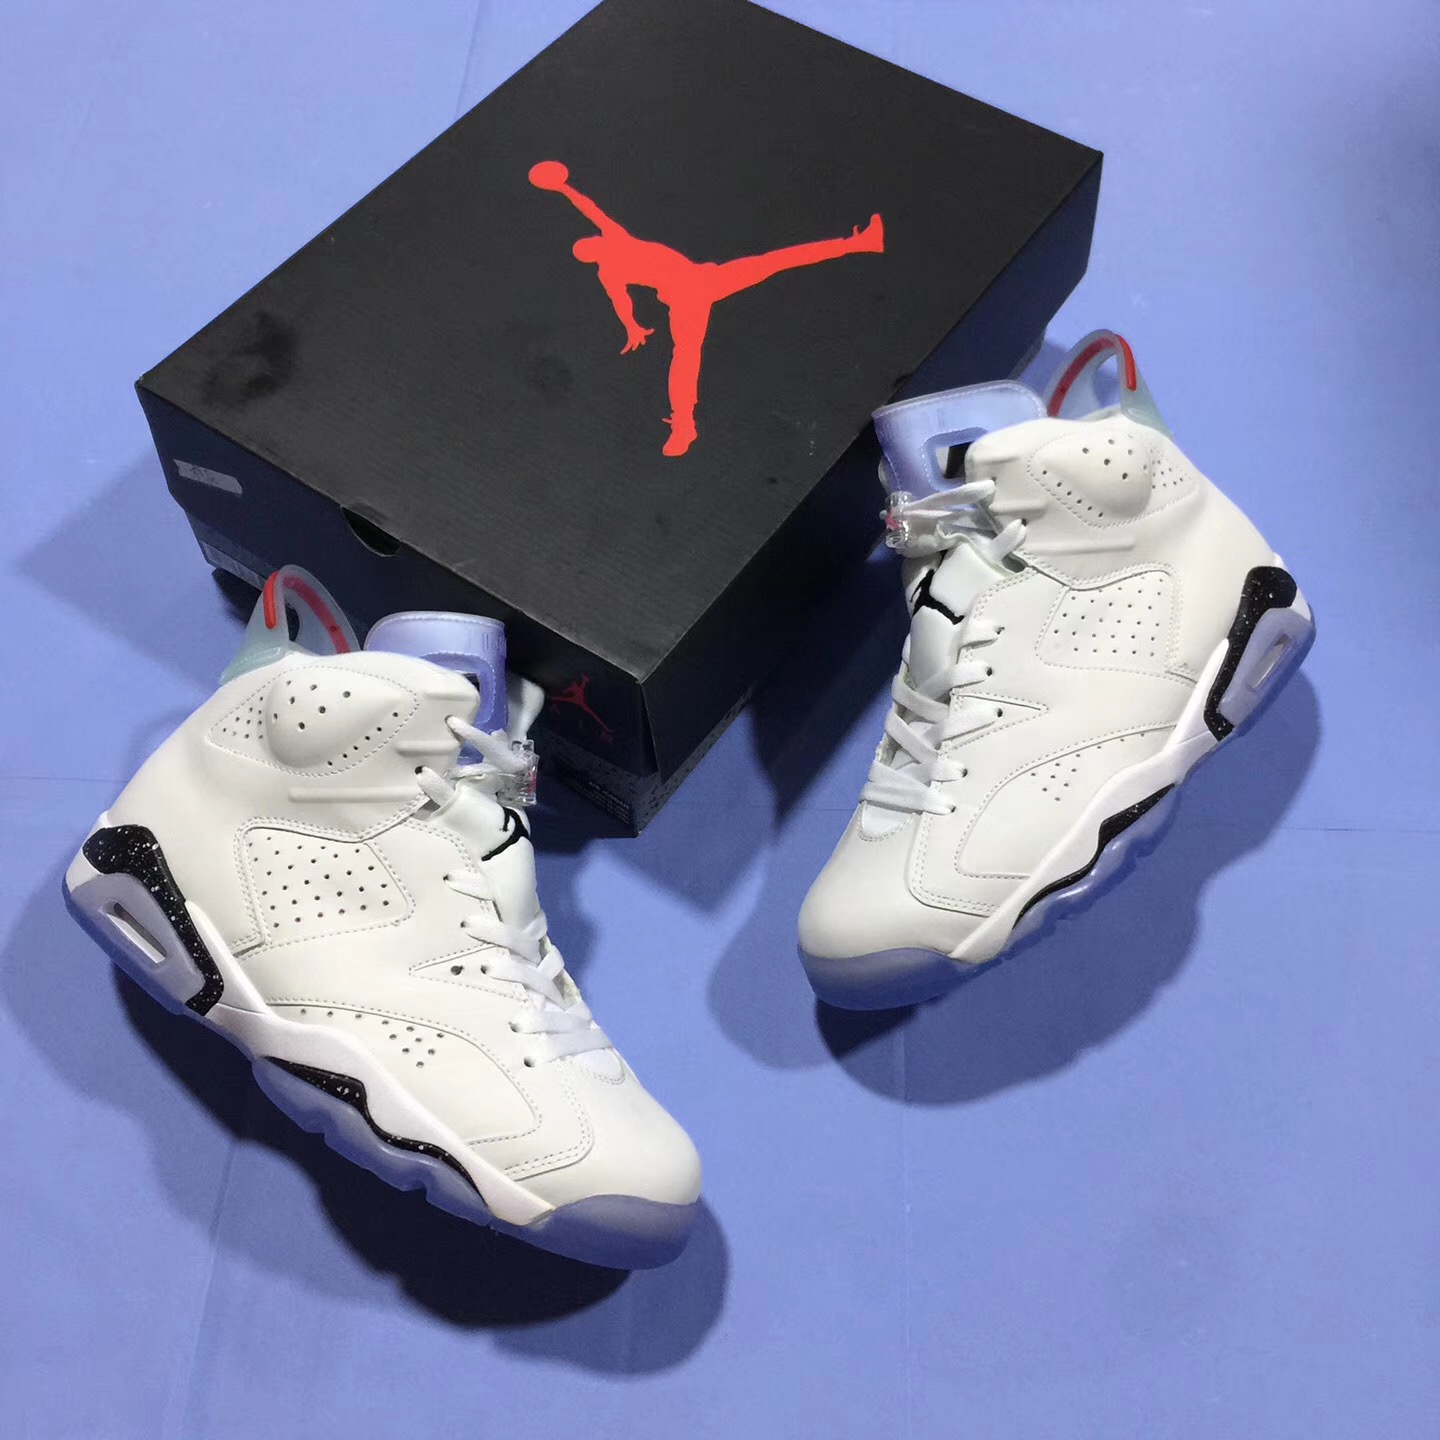 New Air Jordan 6 White Cement Shoes